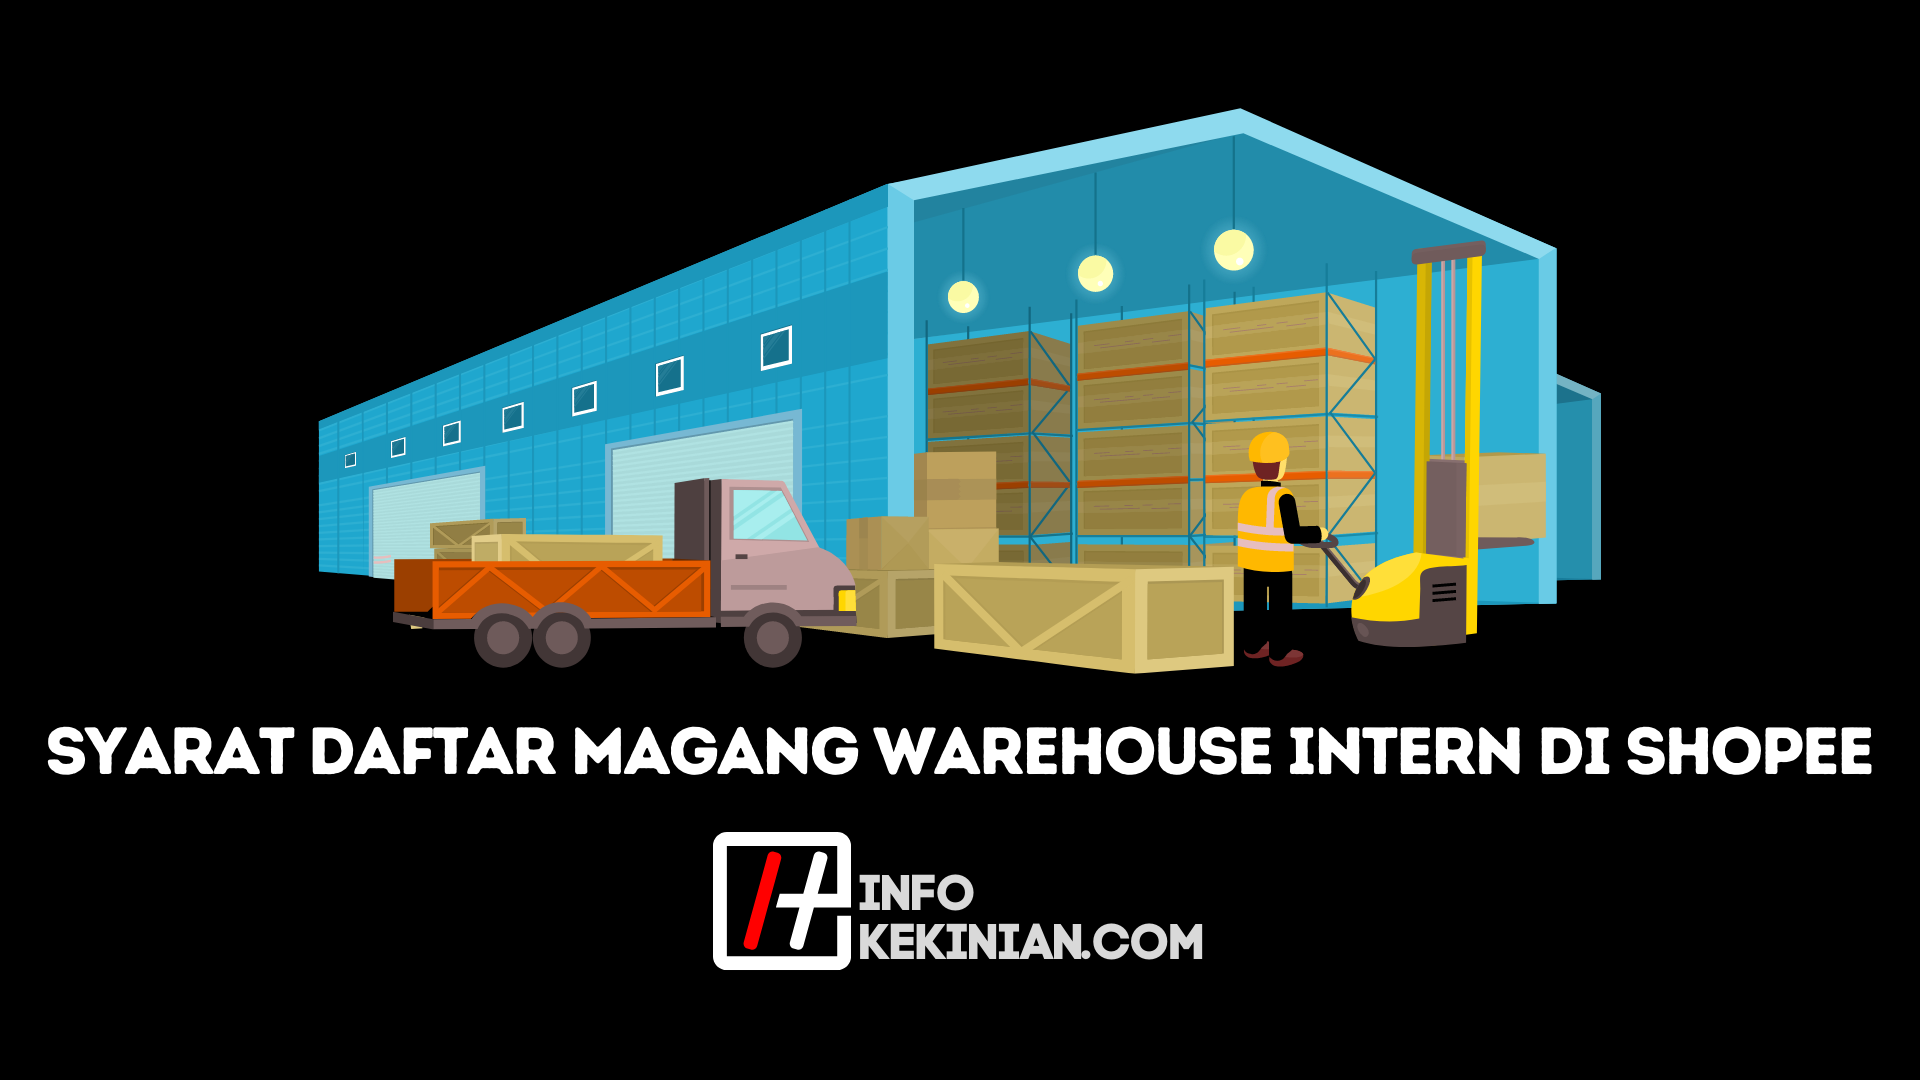 ¿Qué es Warehouse Intern Shopee?